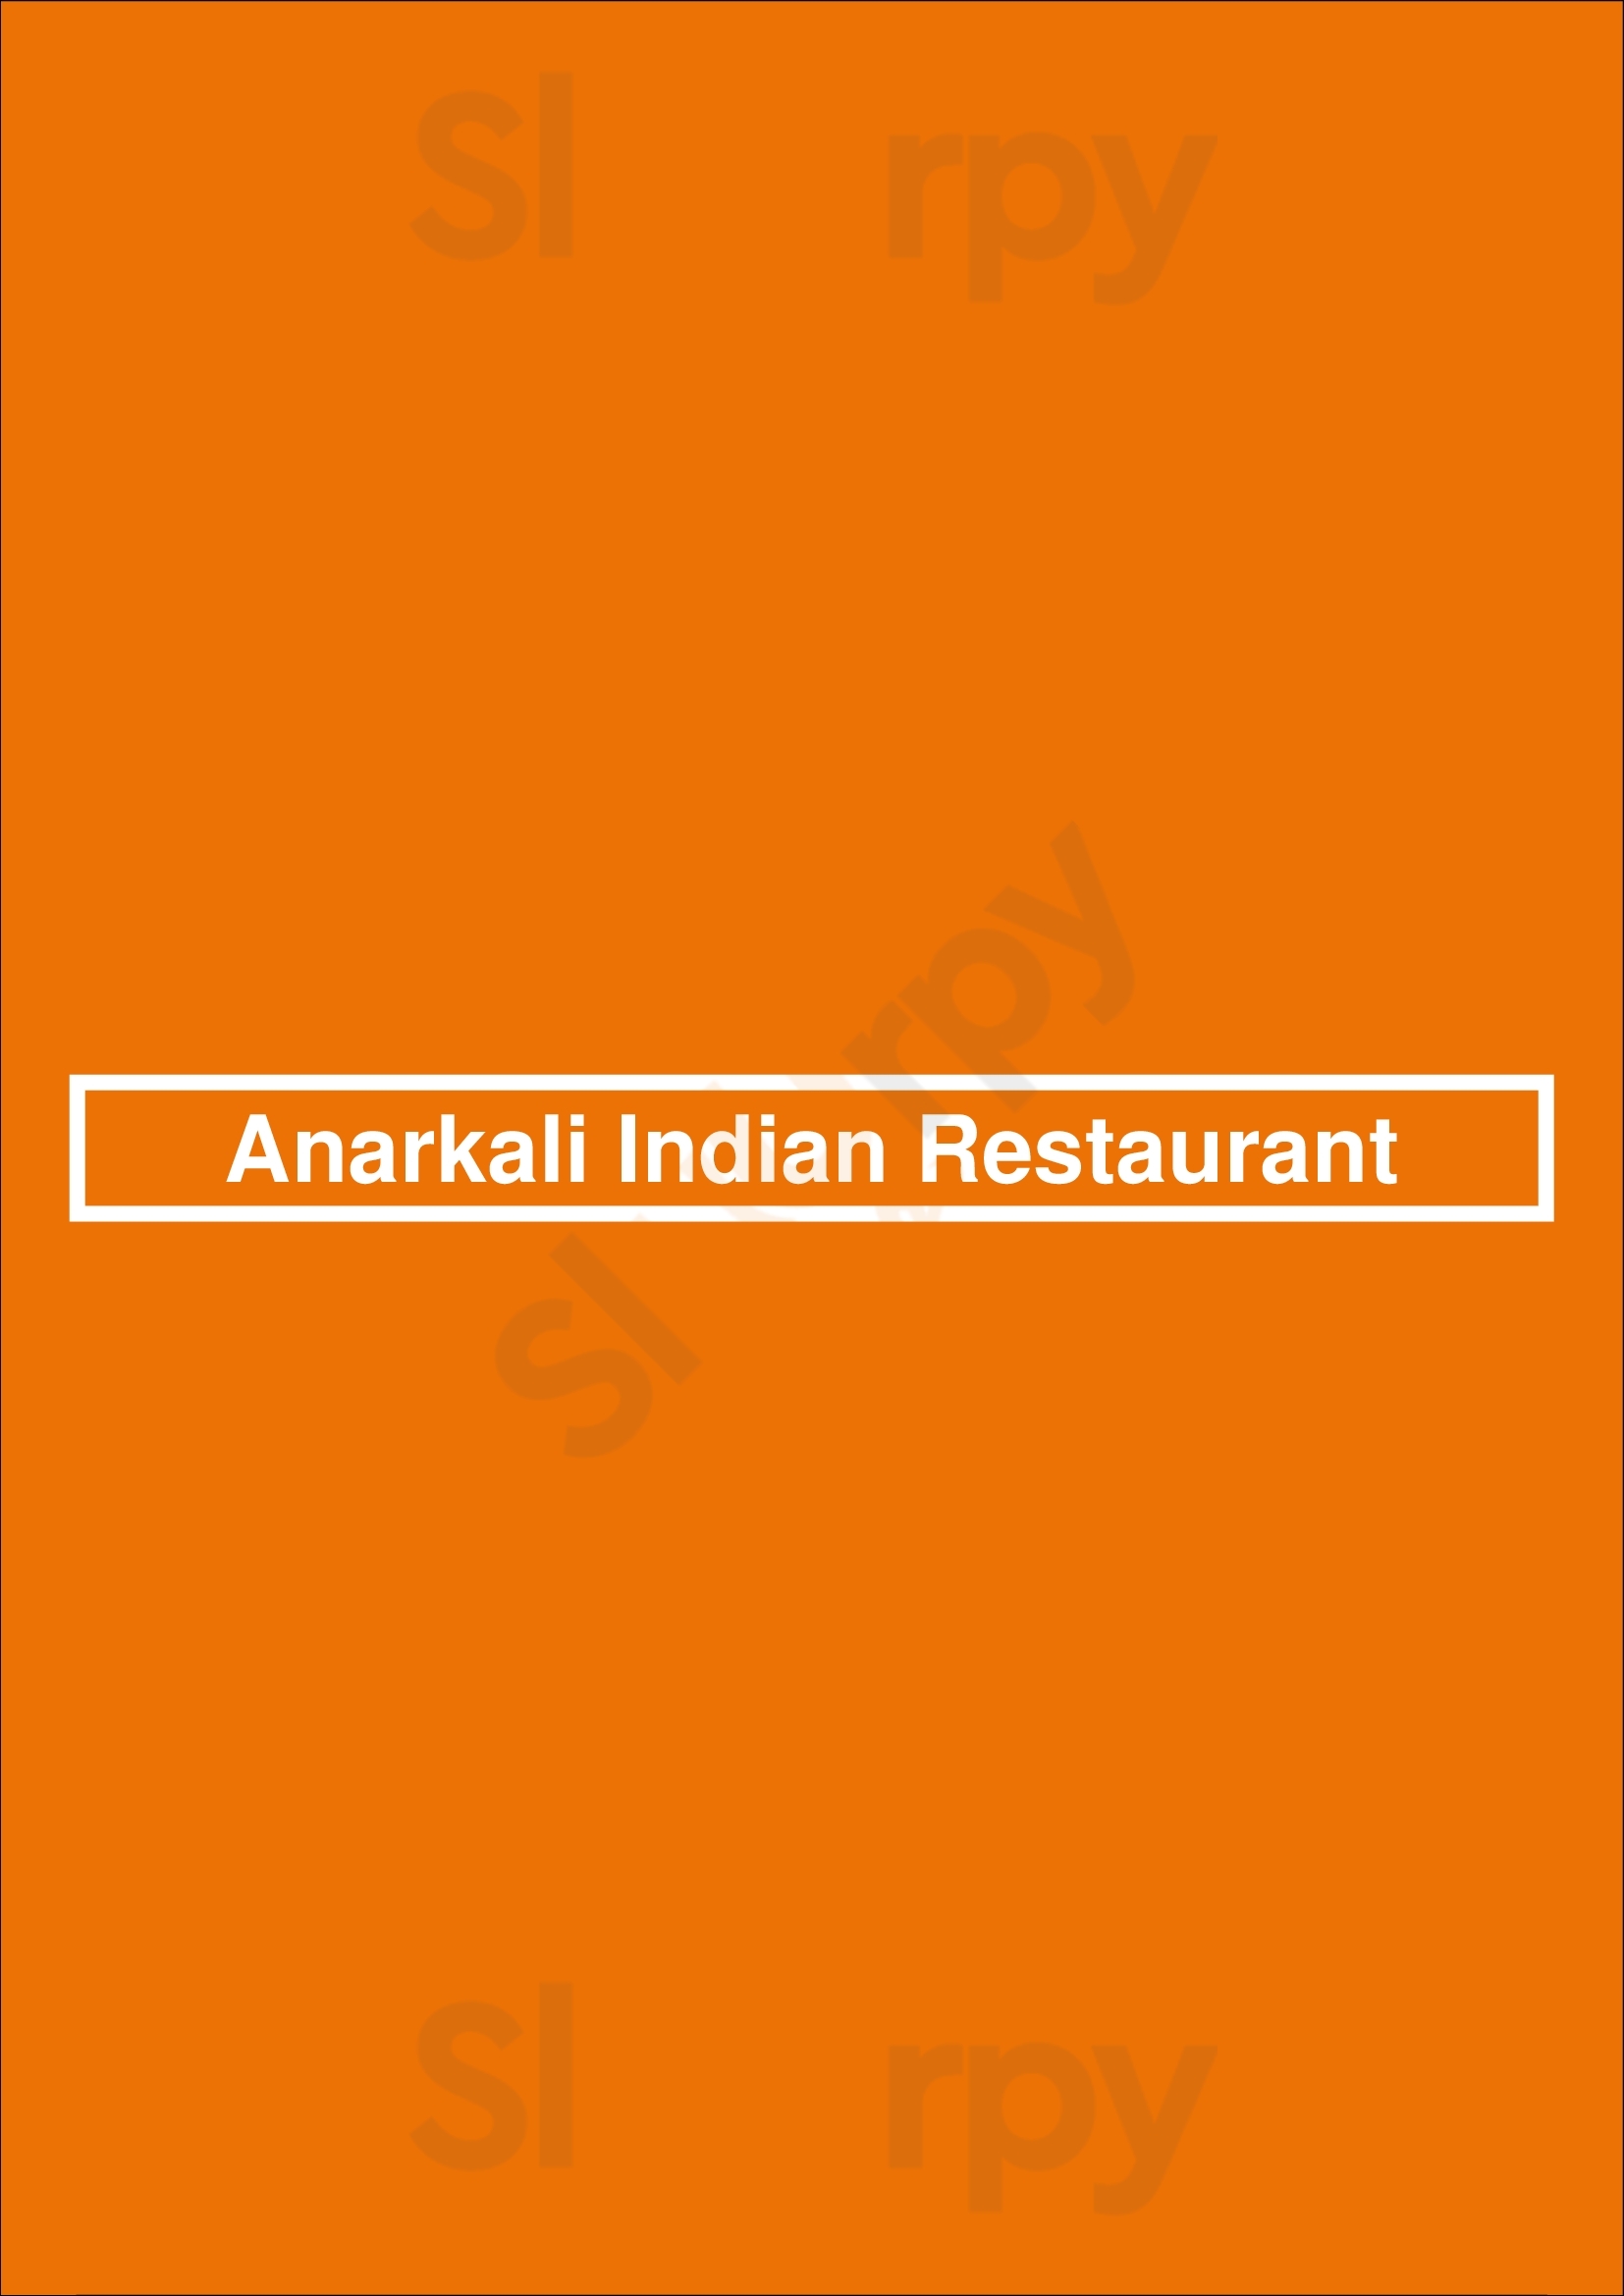 Anarkali Indian Restaurant Los Angeles Menu - 1